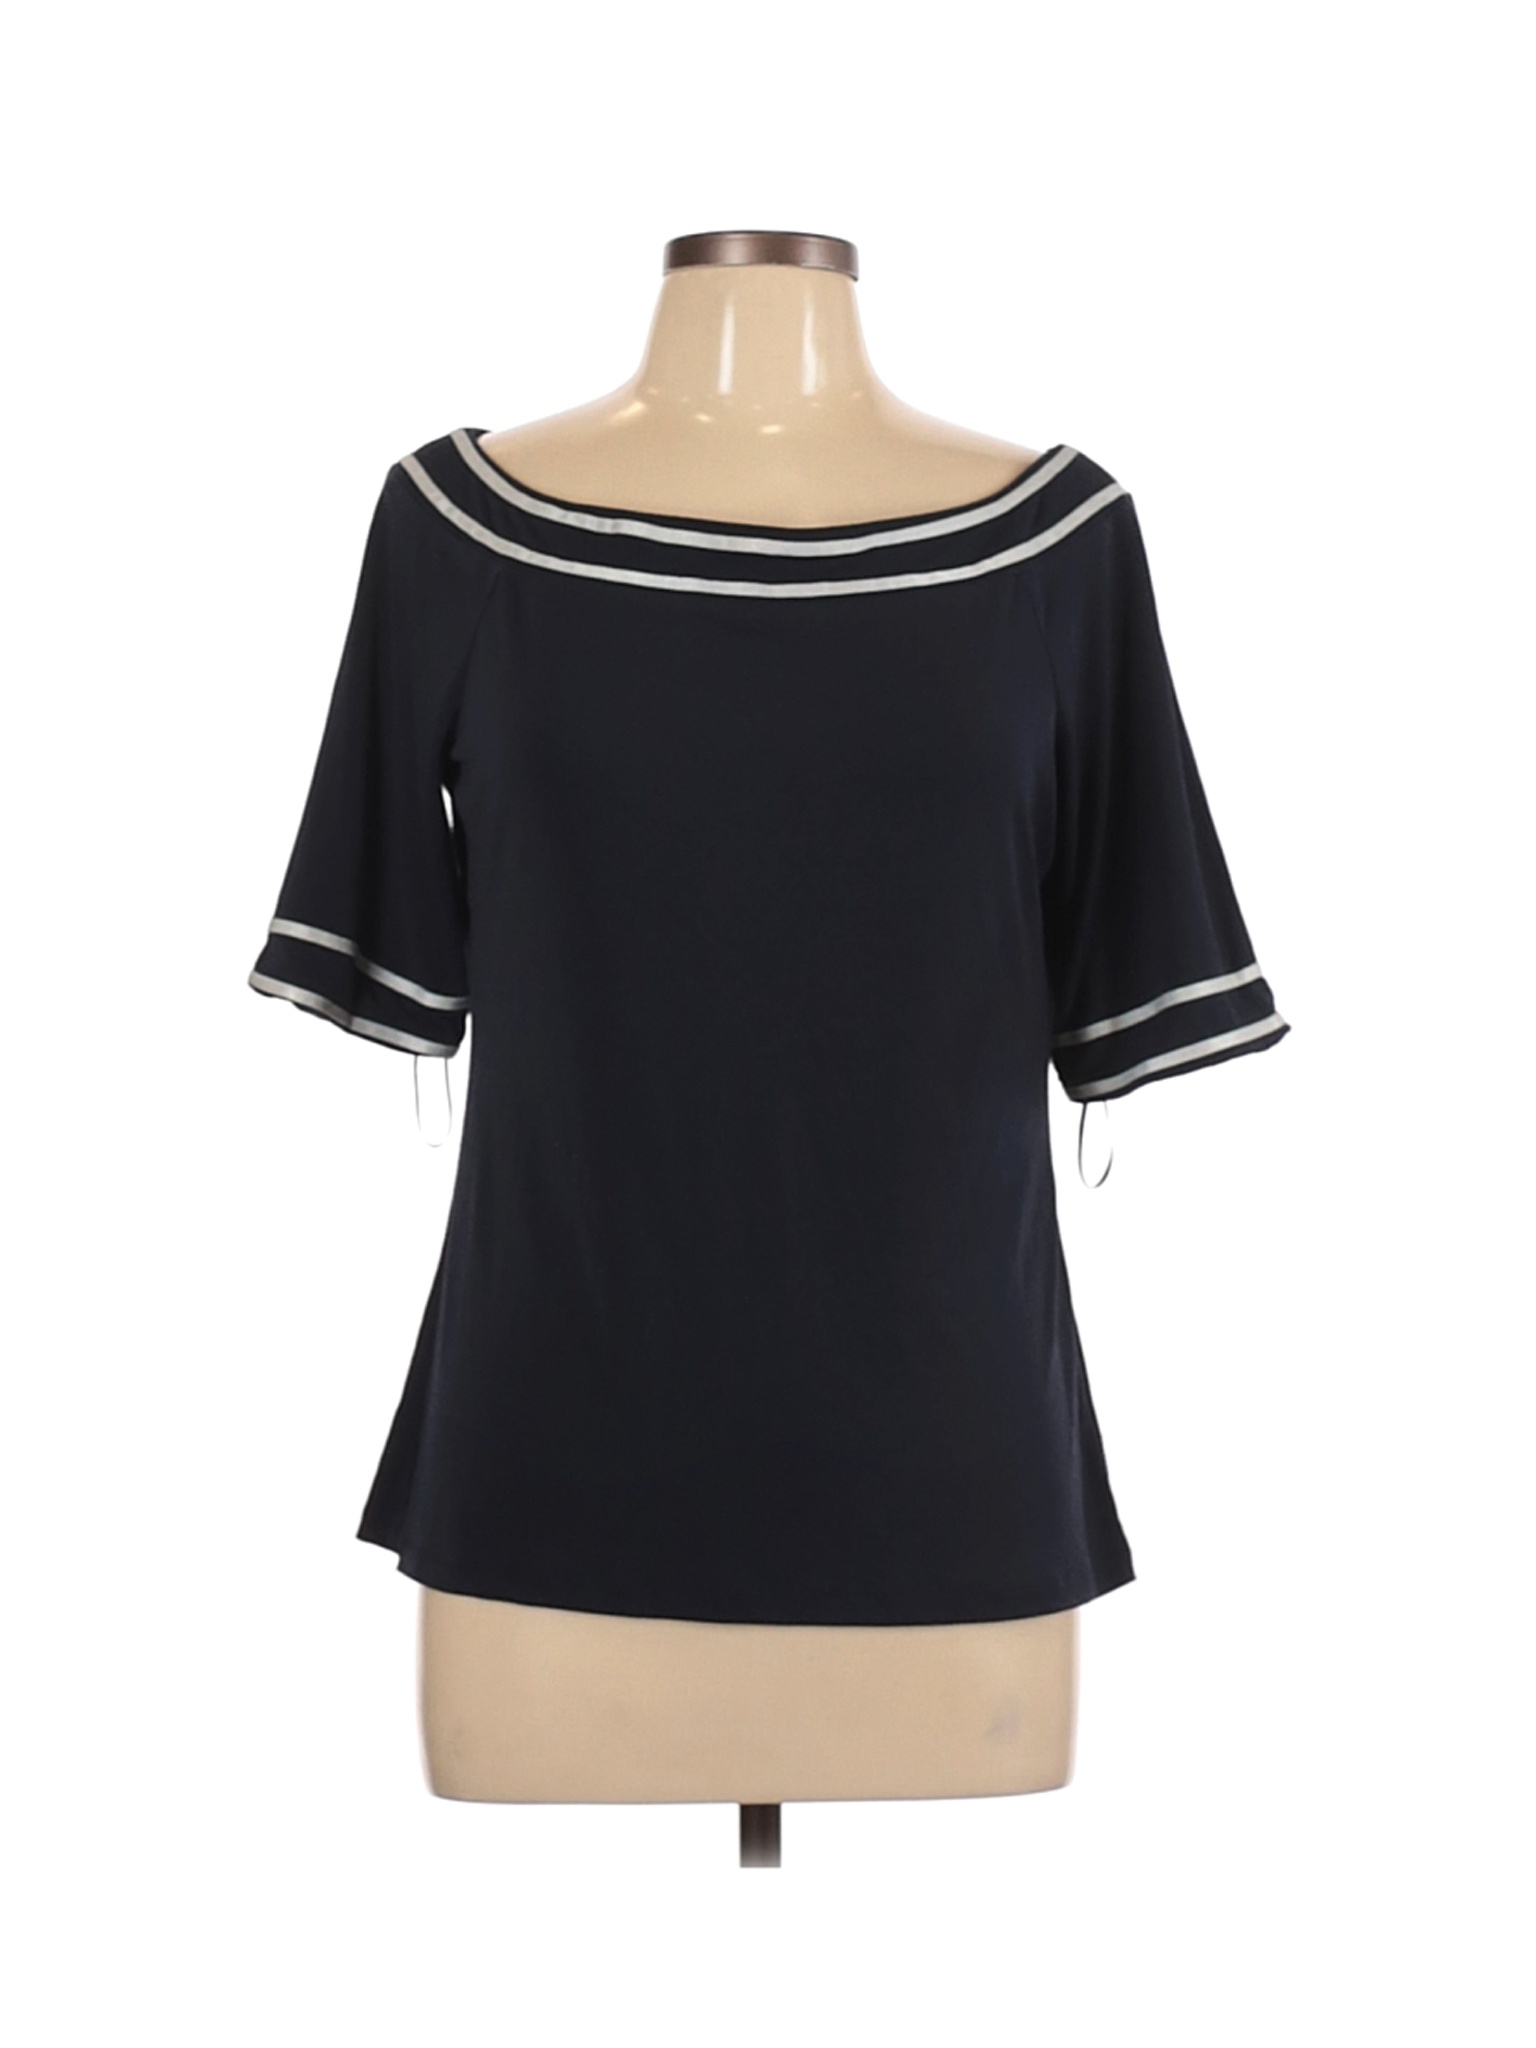 The Limited Women Black Short Sleeve Top L | eBay